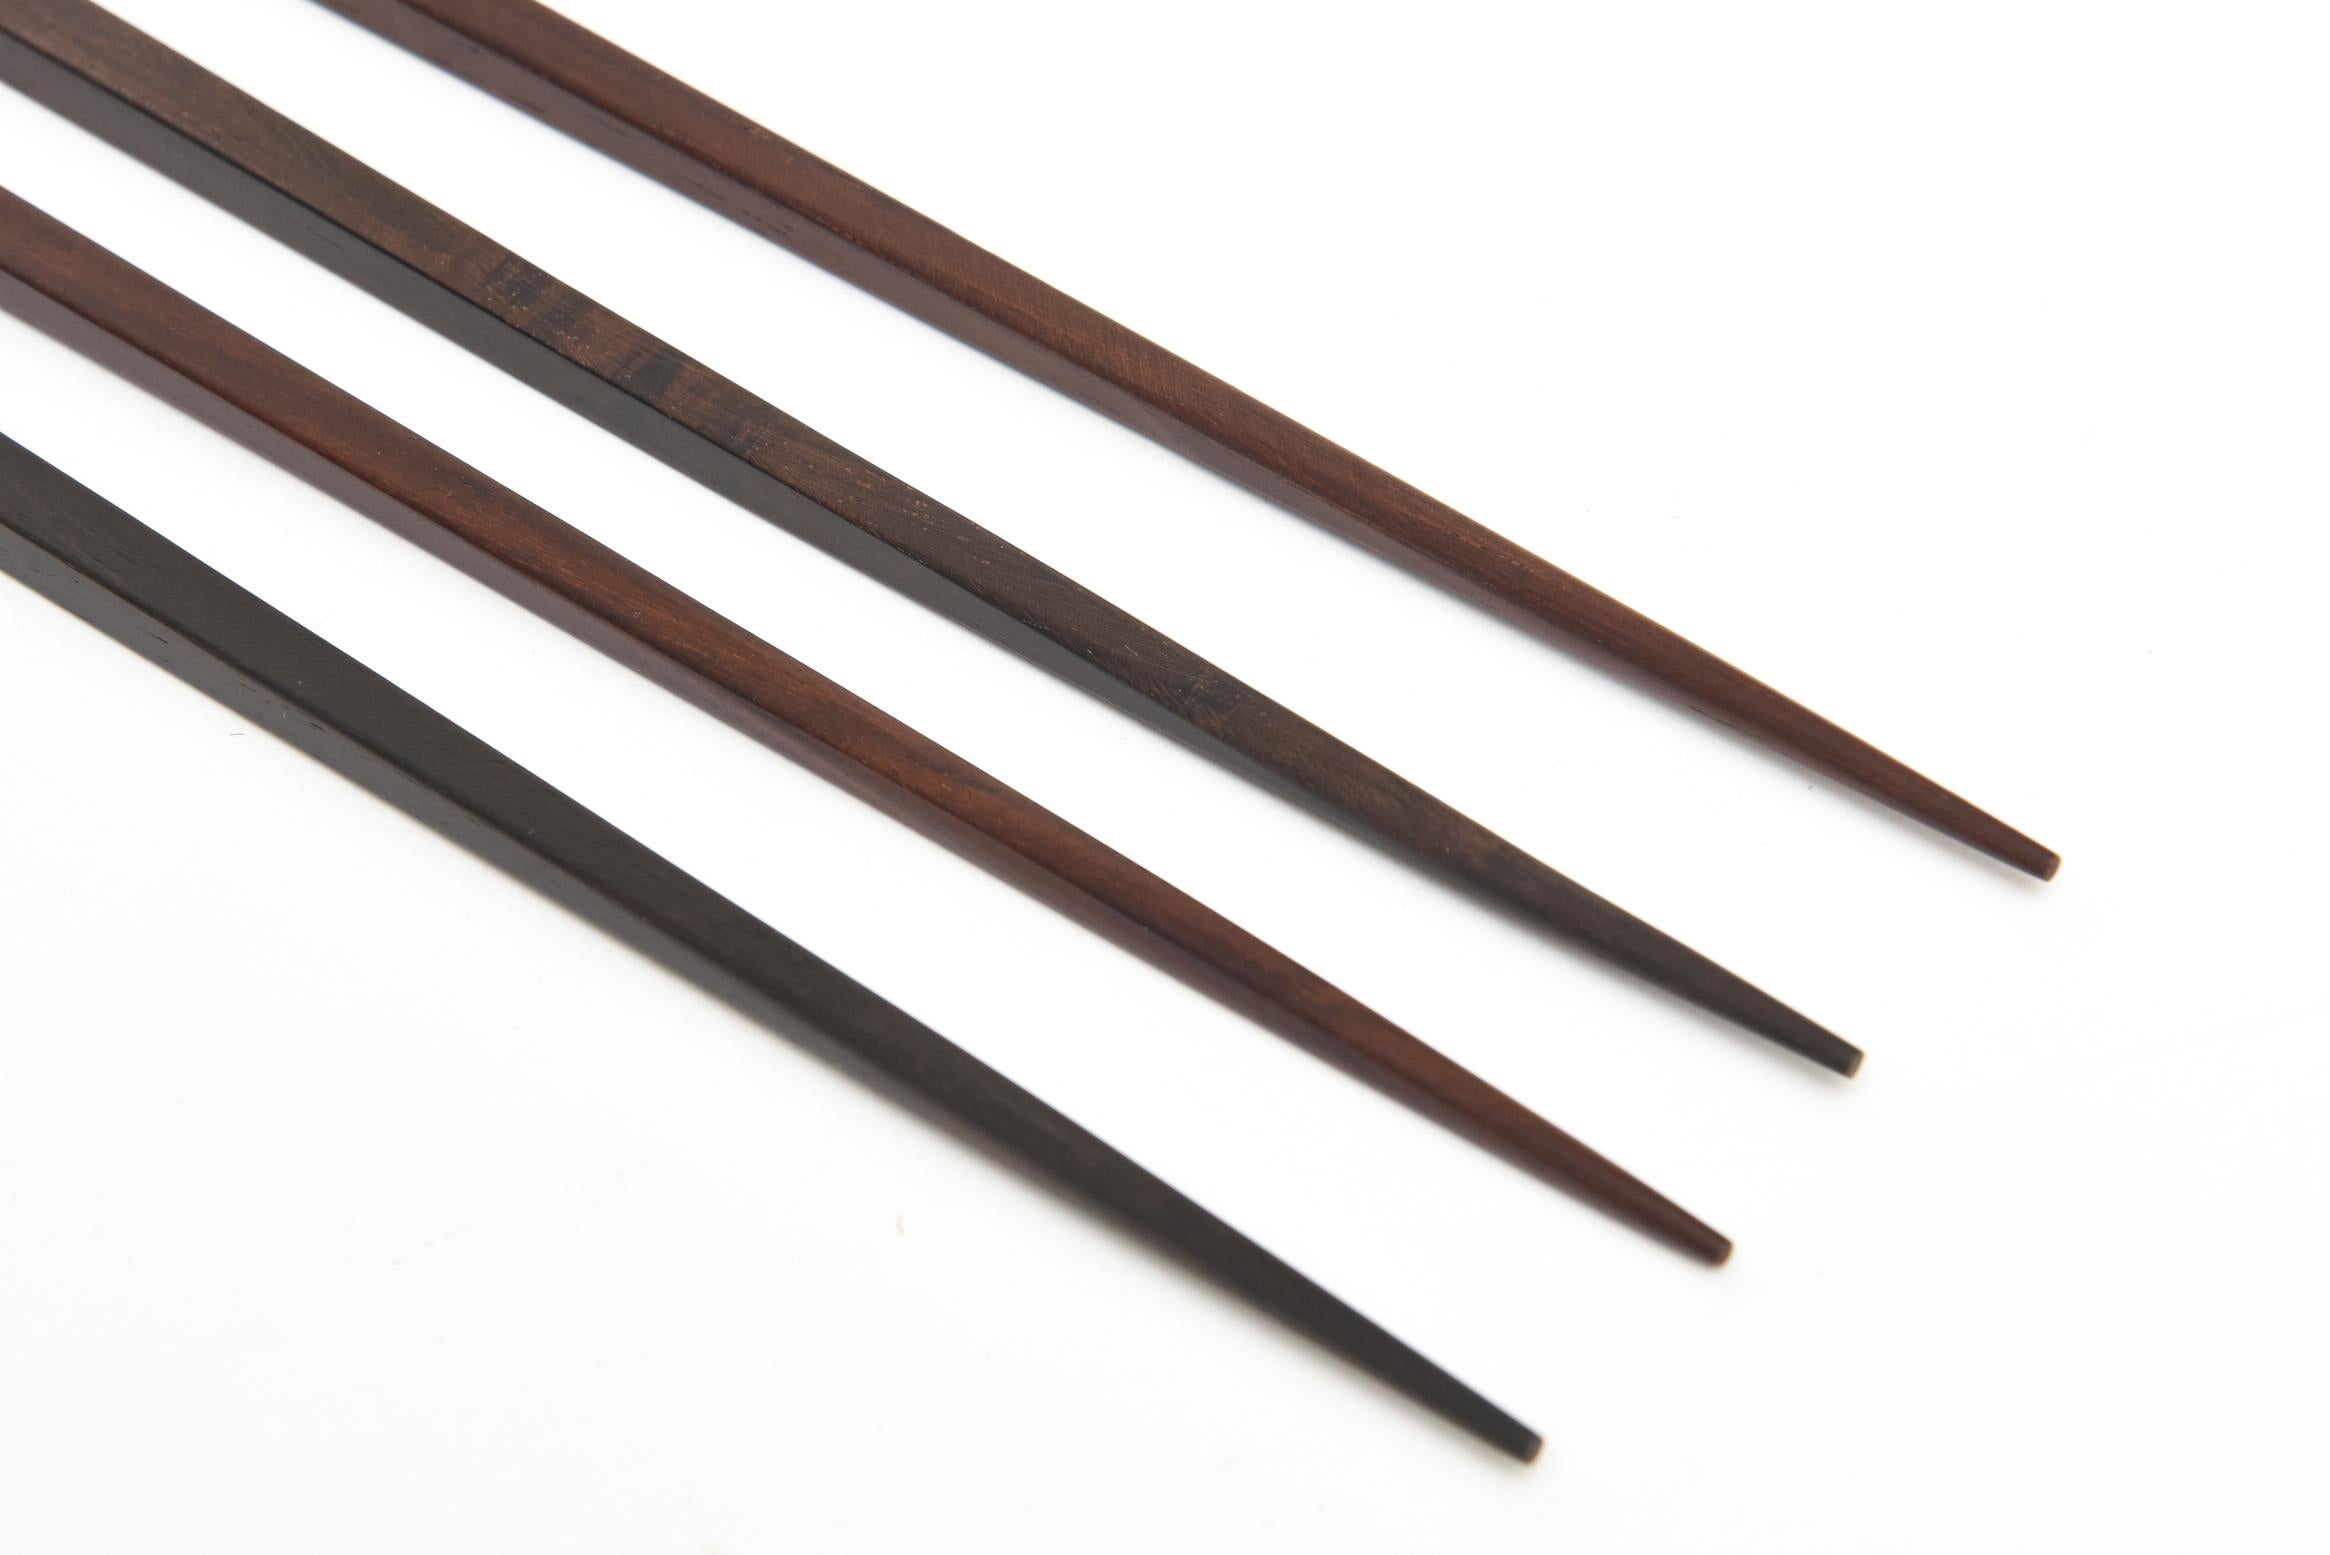  Louis Vuitton Chopstick Set Barware 2